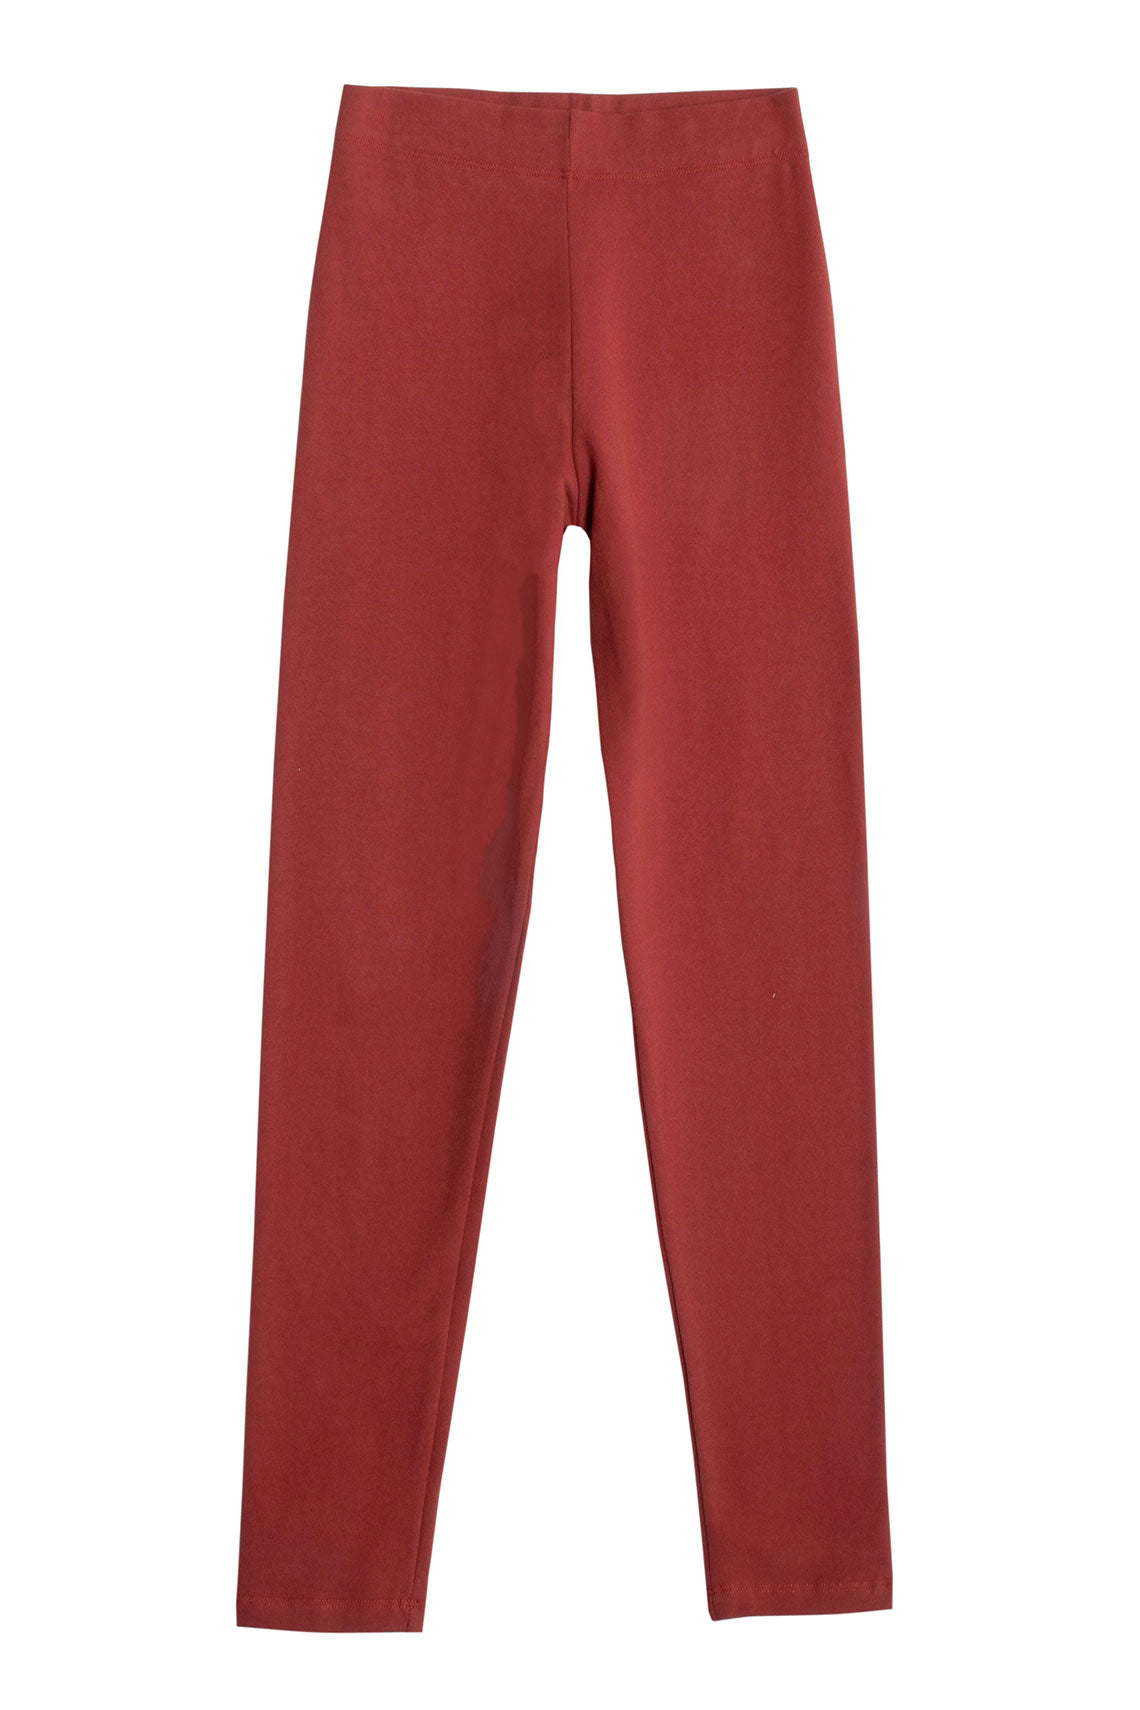 Benton Legging - Red Clay - XXL  Legging, Cotton spandex, Dress 00